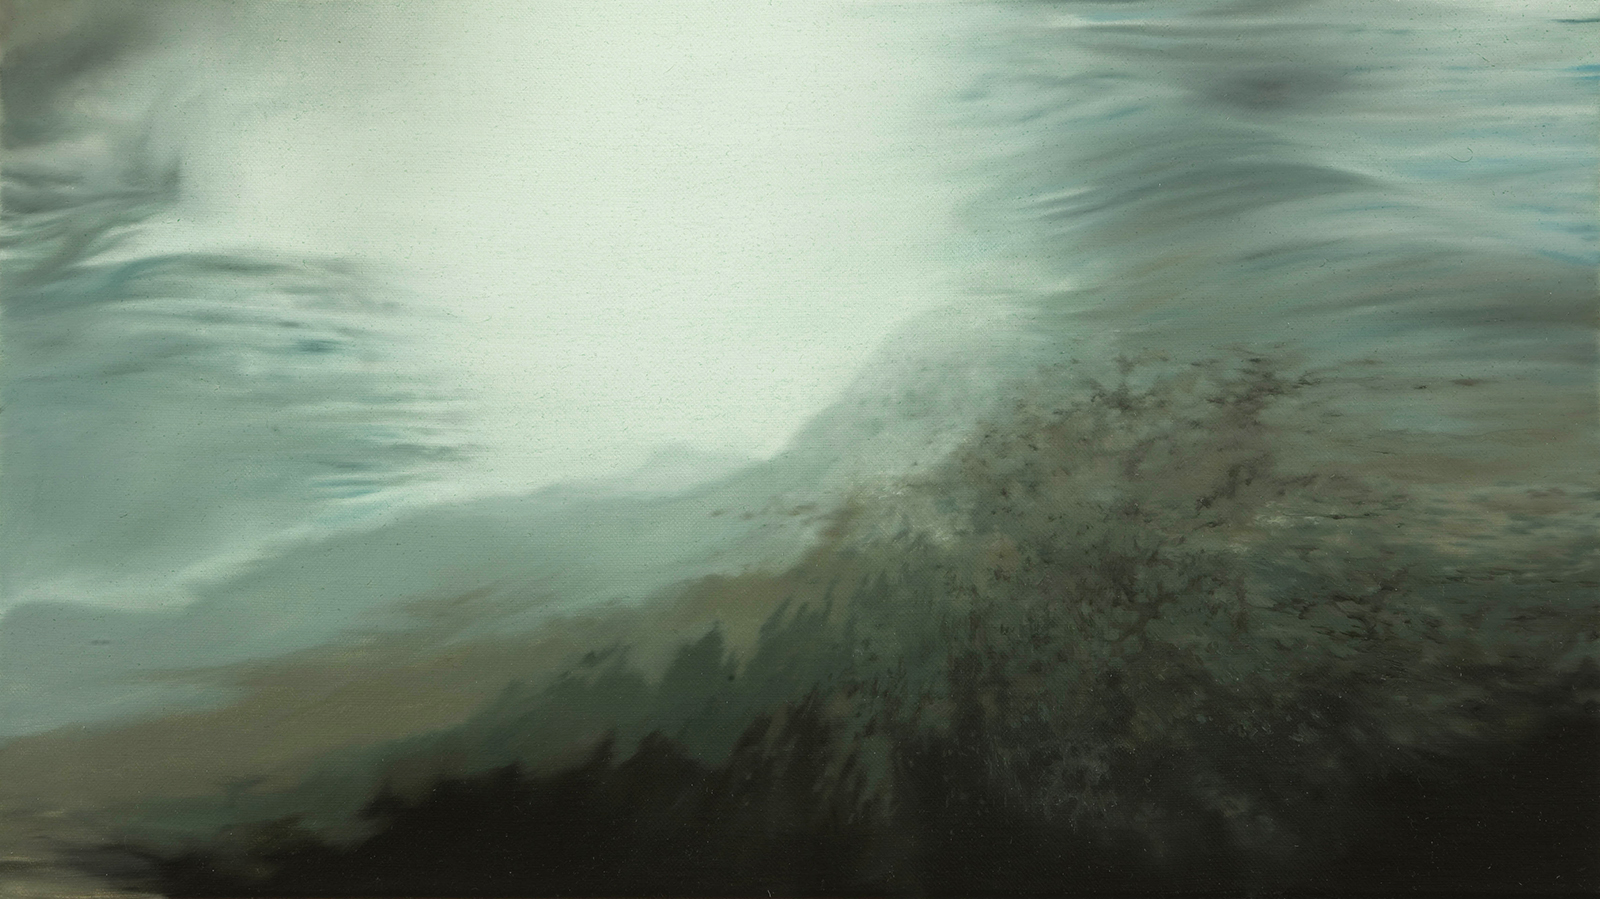 Nordmeer (Brandung) 2007, 30 x 52 cm, Öl auf Leinwand   North Atlantic Ocean (Breakwater) 2007, 30 x 52 cm, oil on canvas